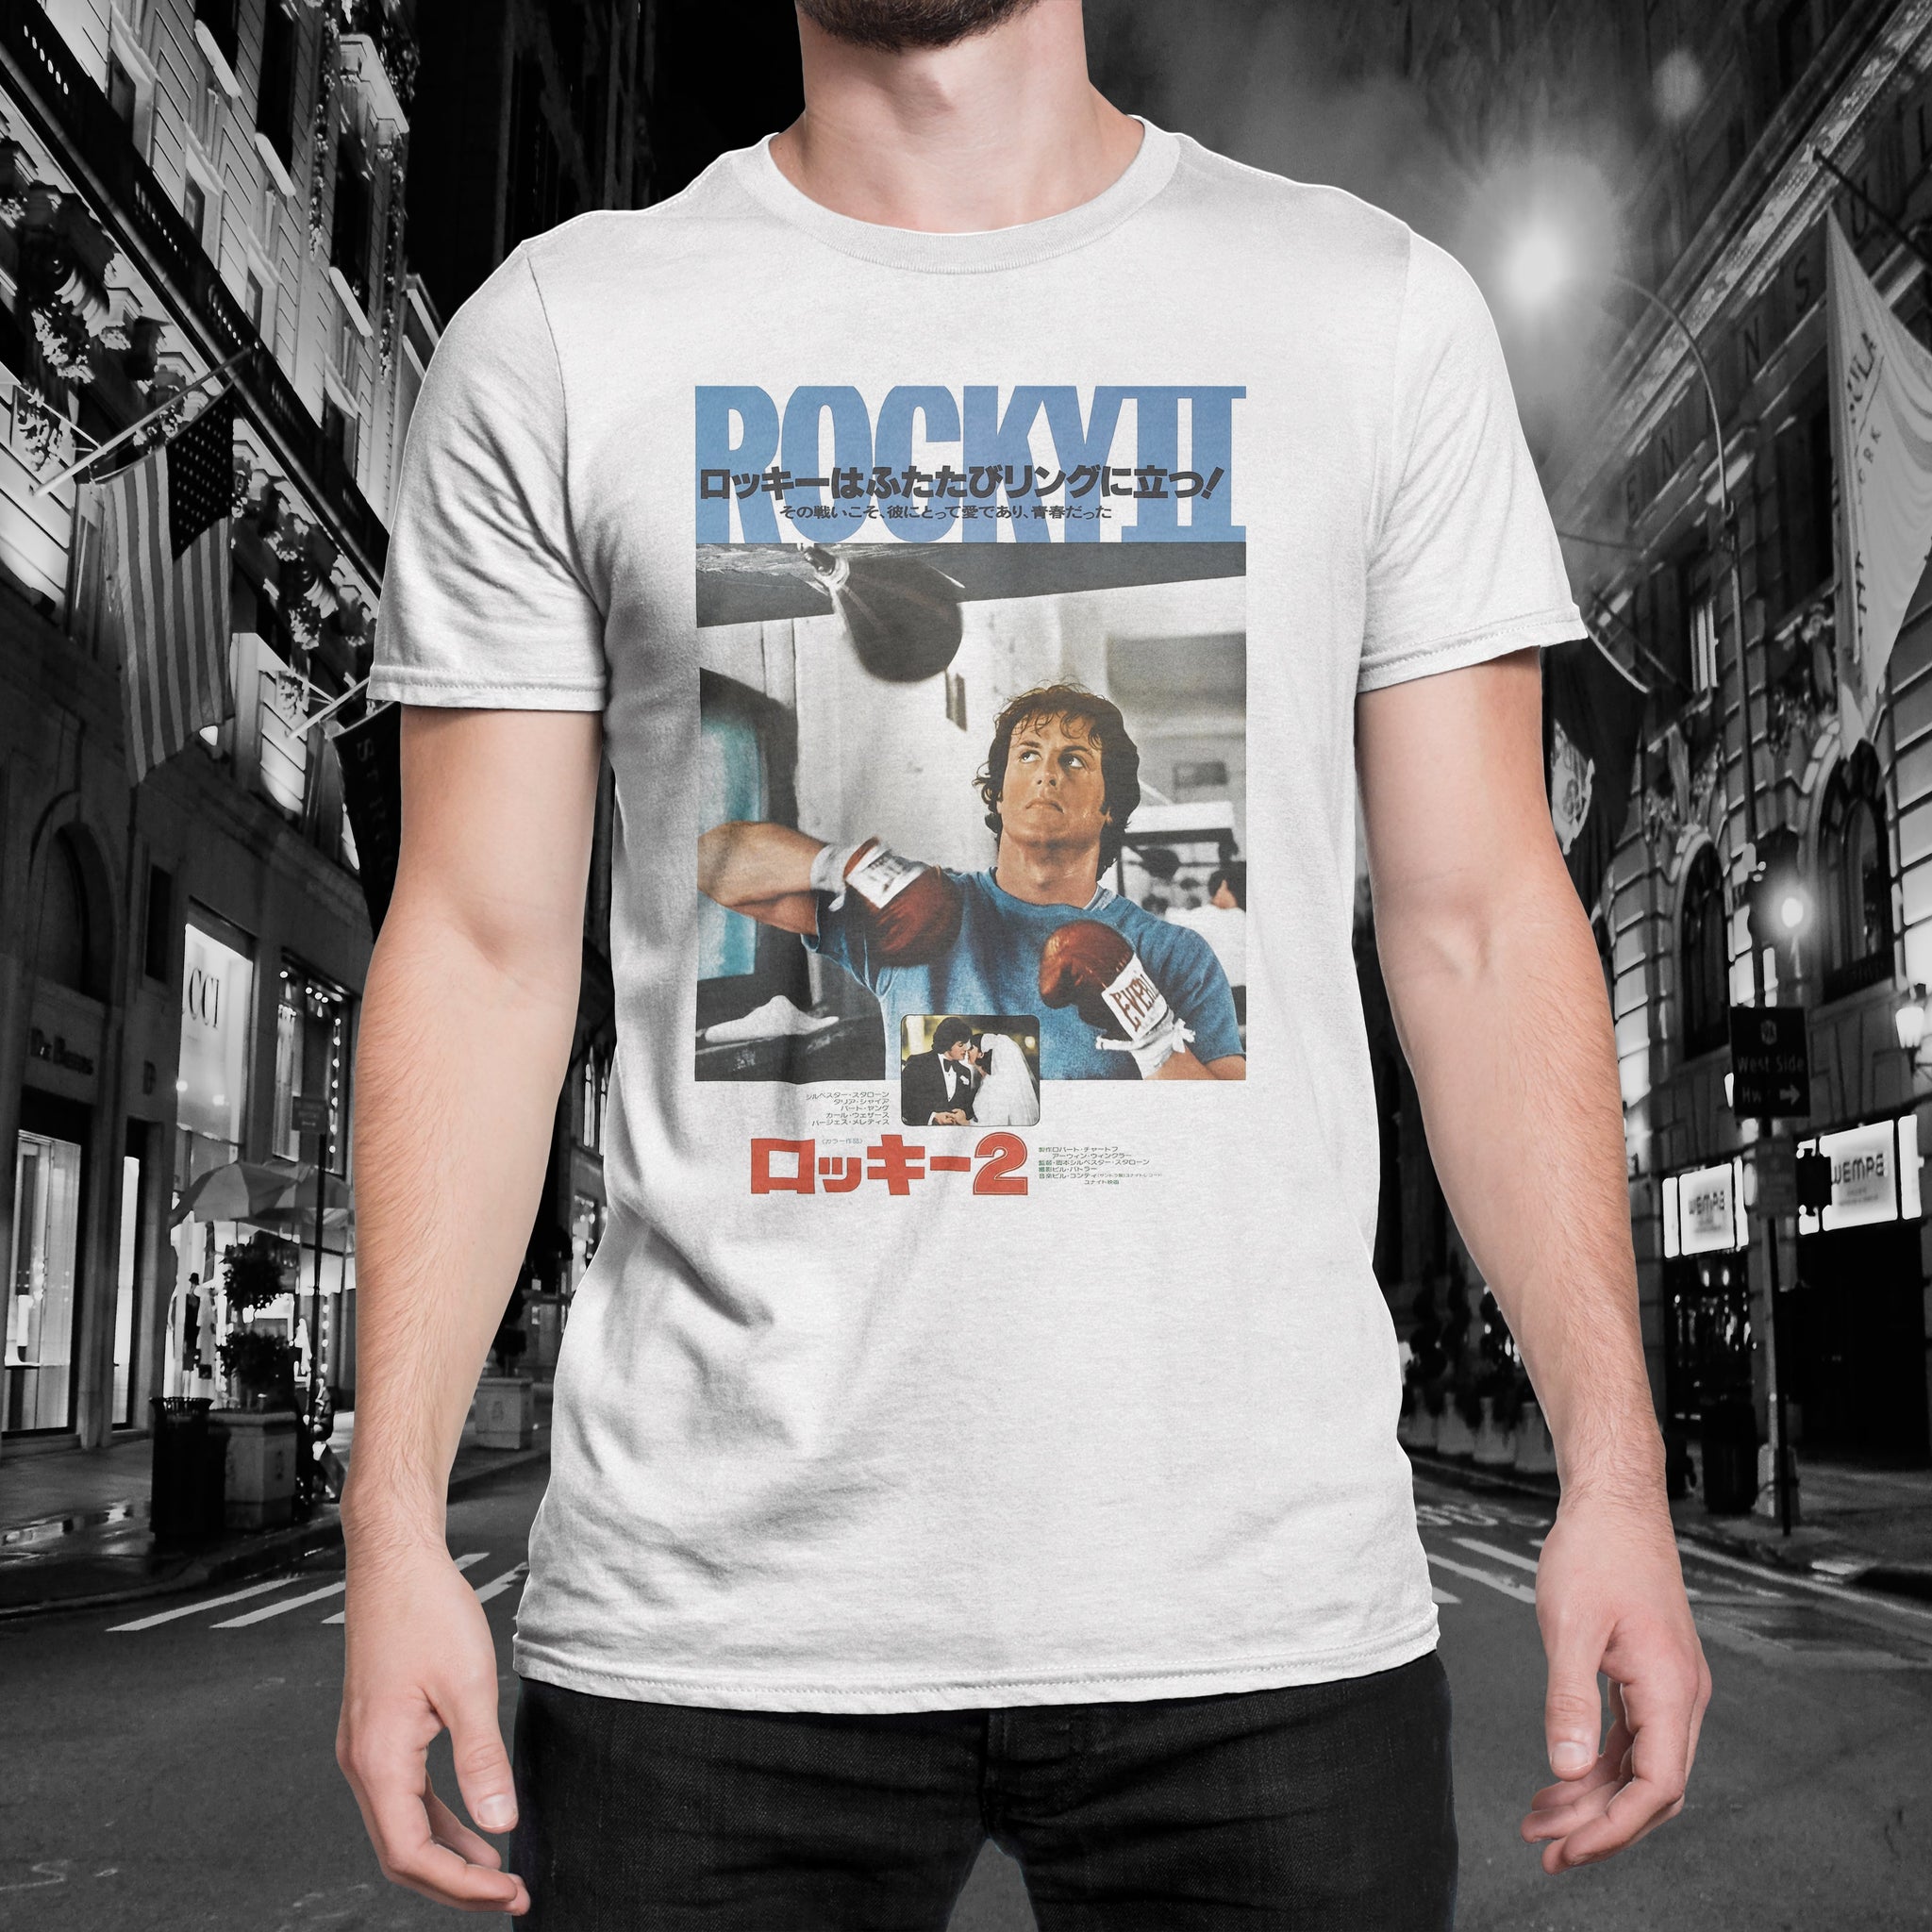 Rocky II "Japan" Tee